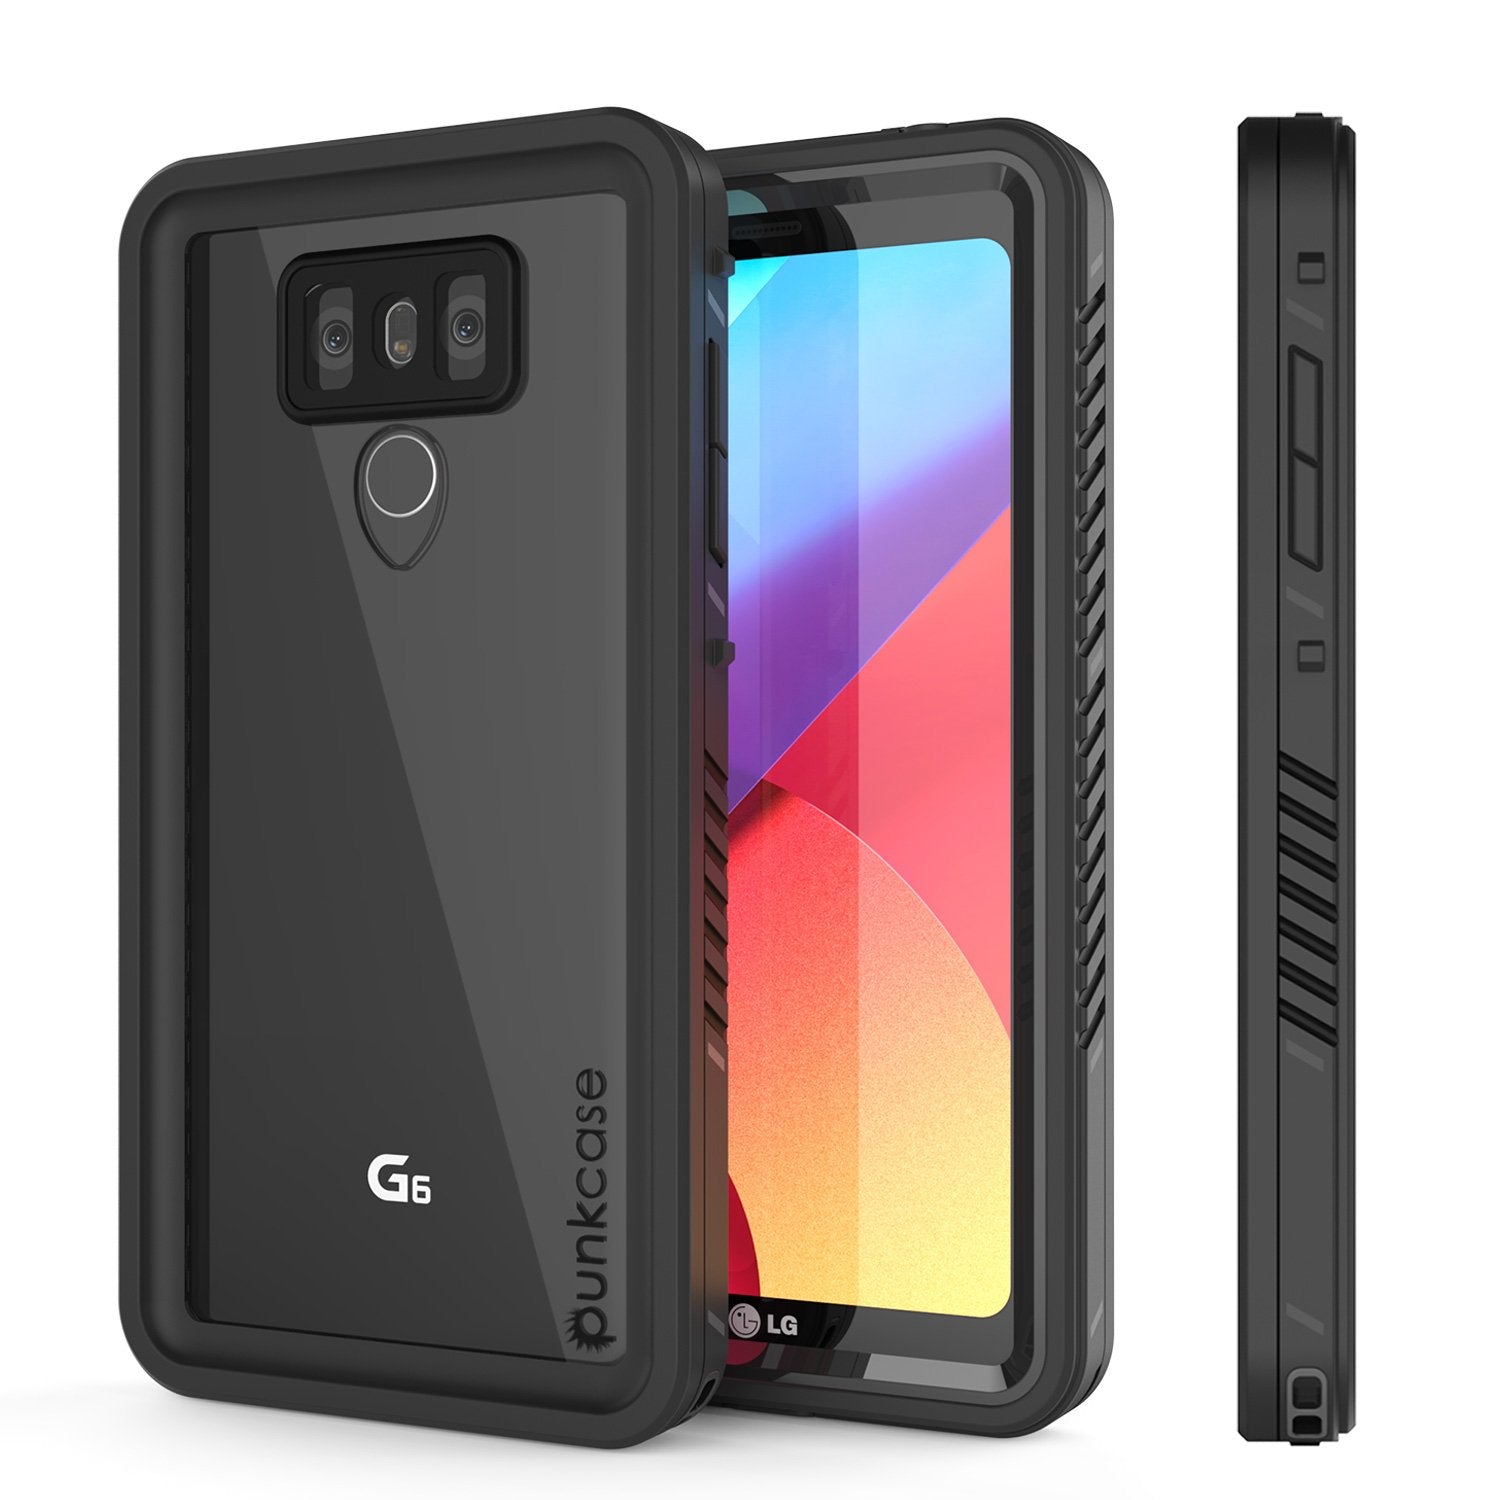 LG G6 Waterproof Case, Punkcase [Extreme Series] [Slim Fit] [IP68 Certified] [Shockproof] [Snowproof] [Dirproof] Armor Cover W/ Built In Screen Protector for LG G6 [BLACK]